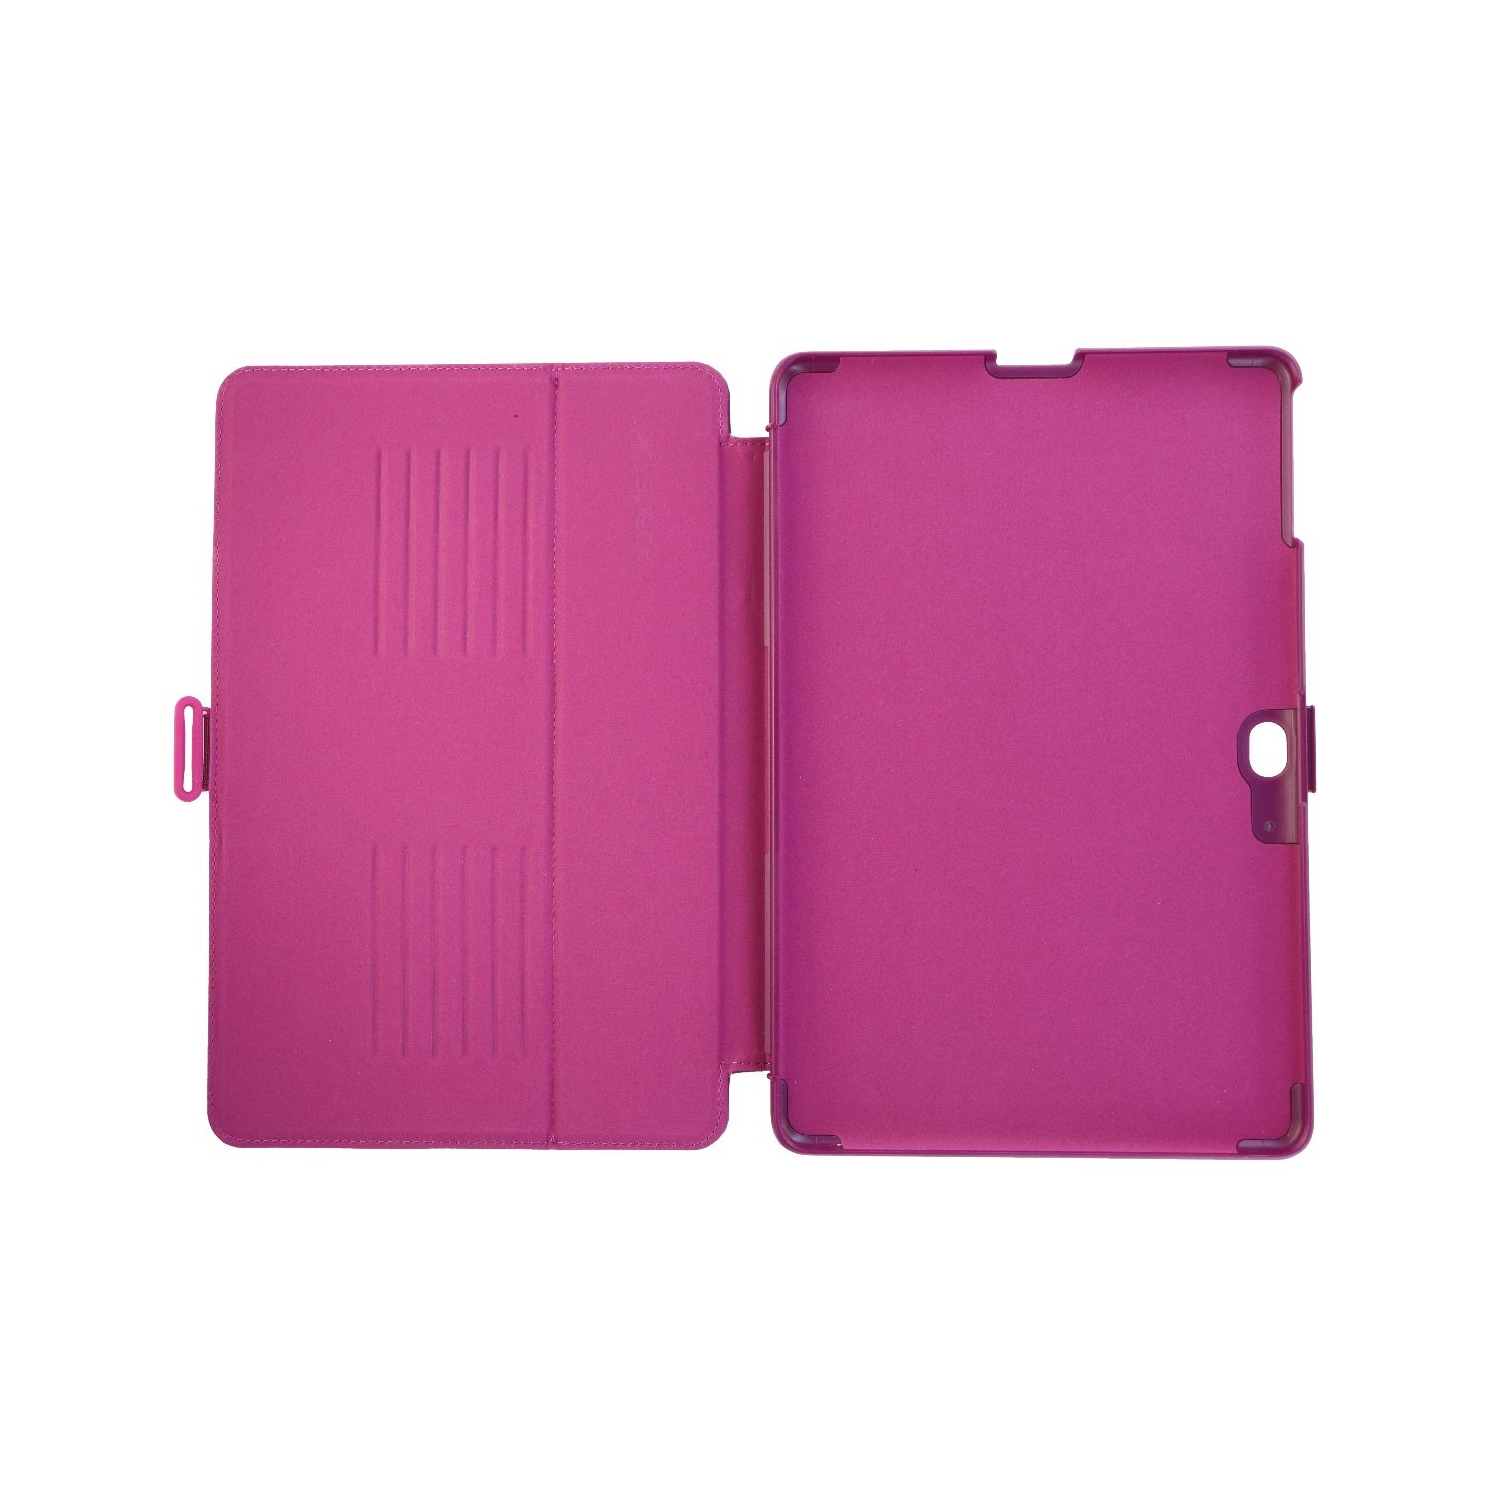 Speck Balance Folio Tablet Case Vz Ellipsis 10 HD Syrah Purple Magenta Pink 103604-5748